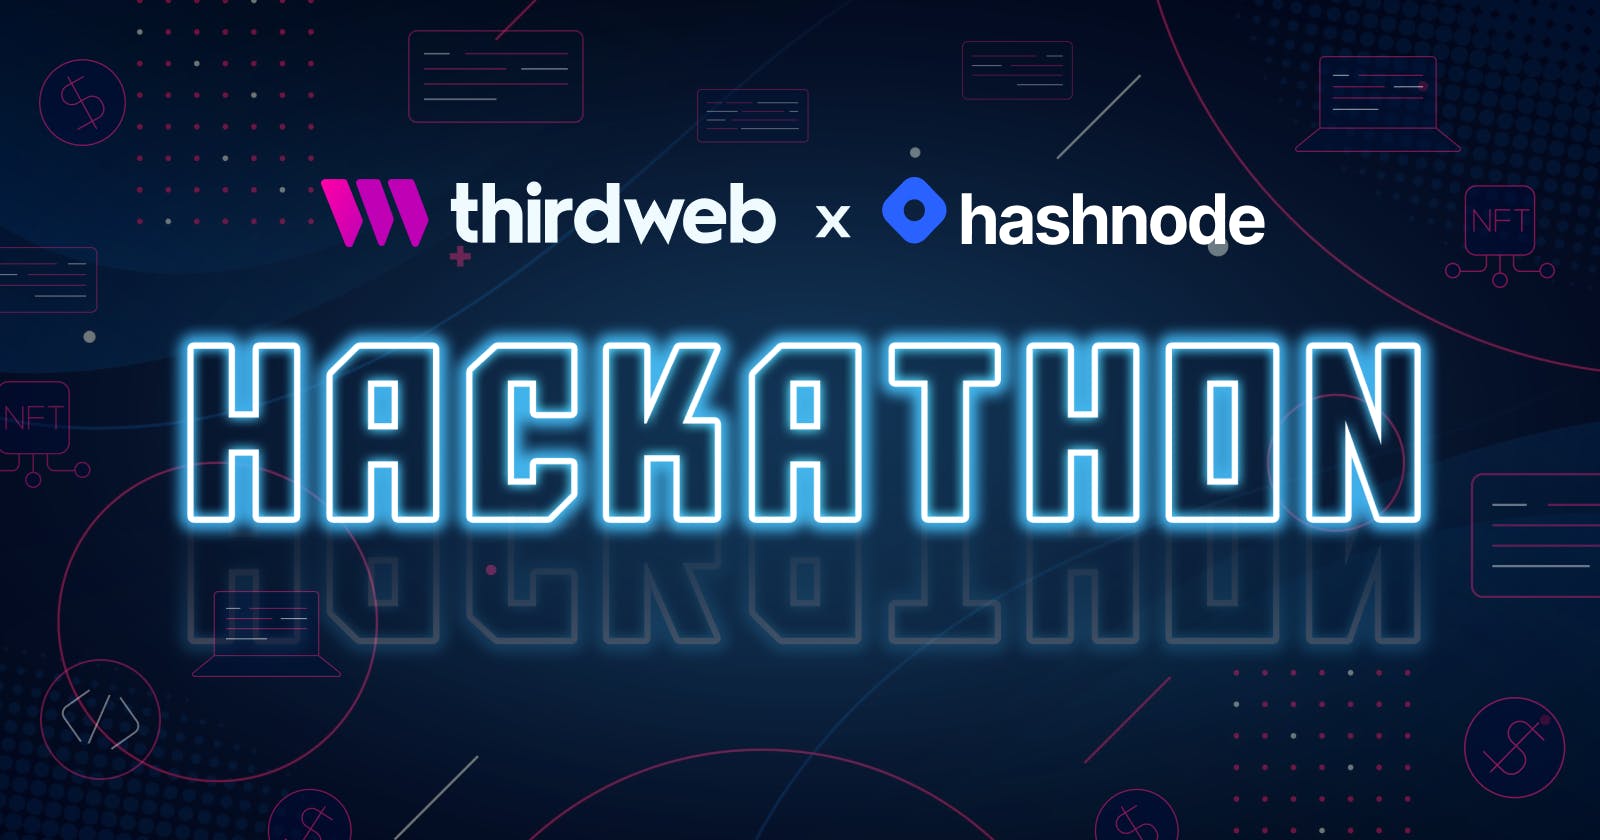 Let's kick off 2022 with the thirdweb x Hashnode Hackathon 🚀